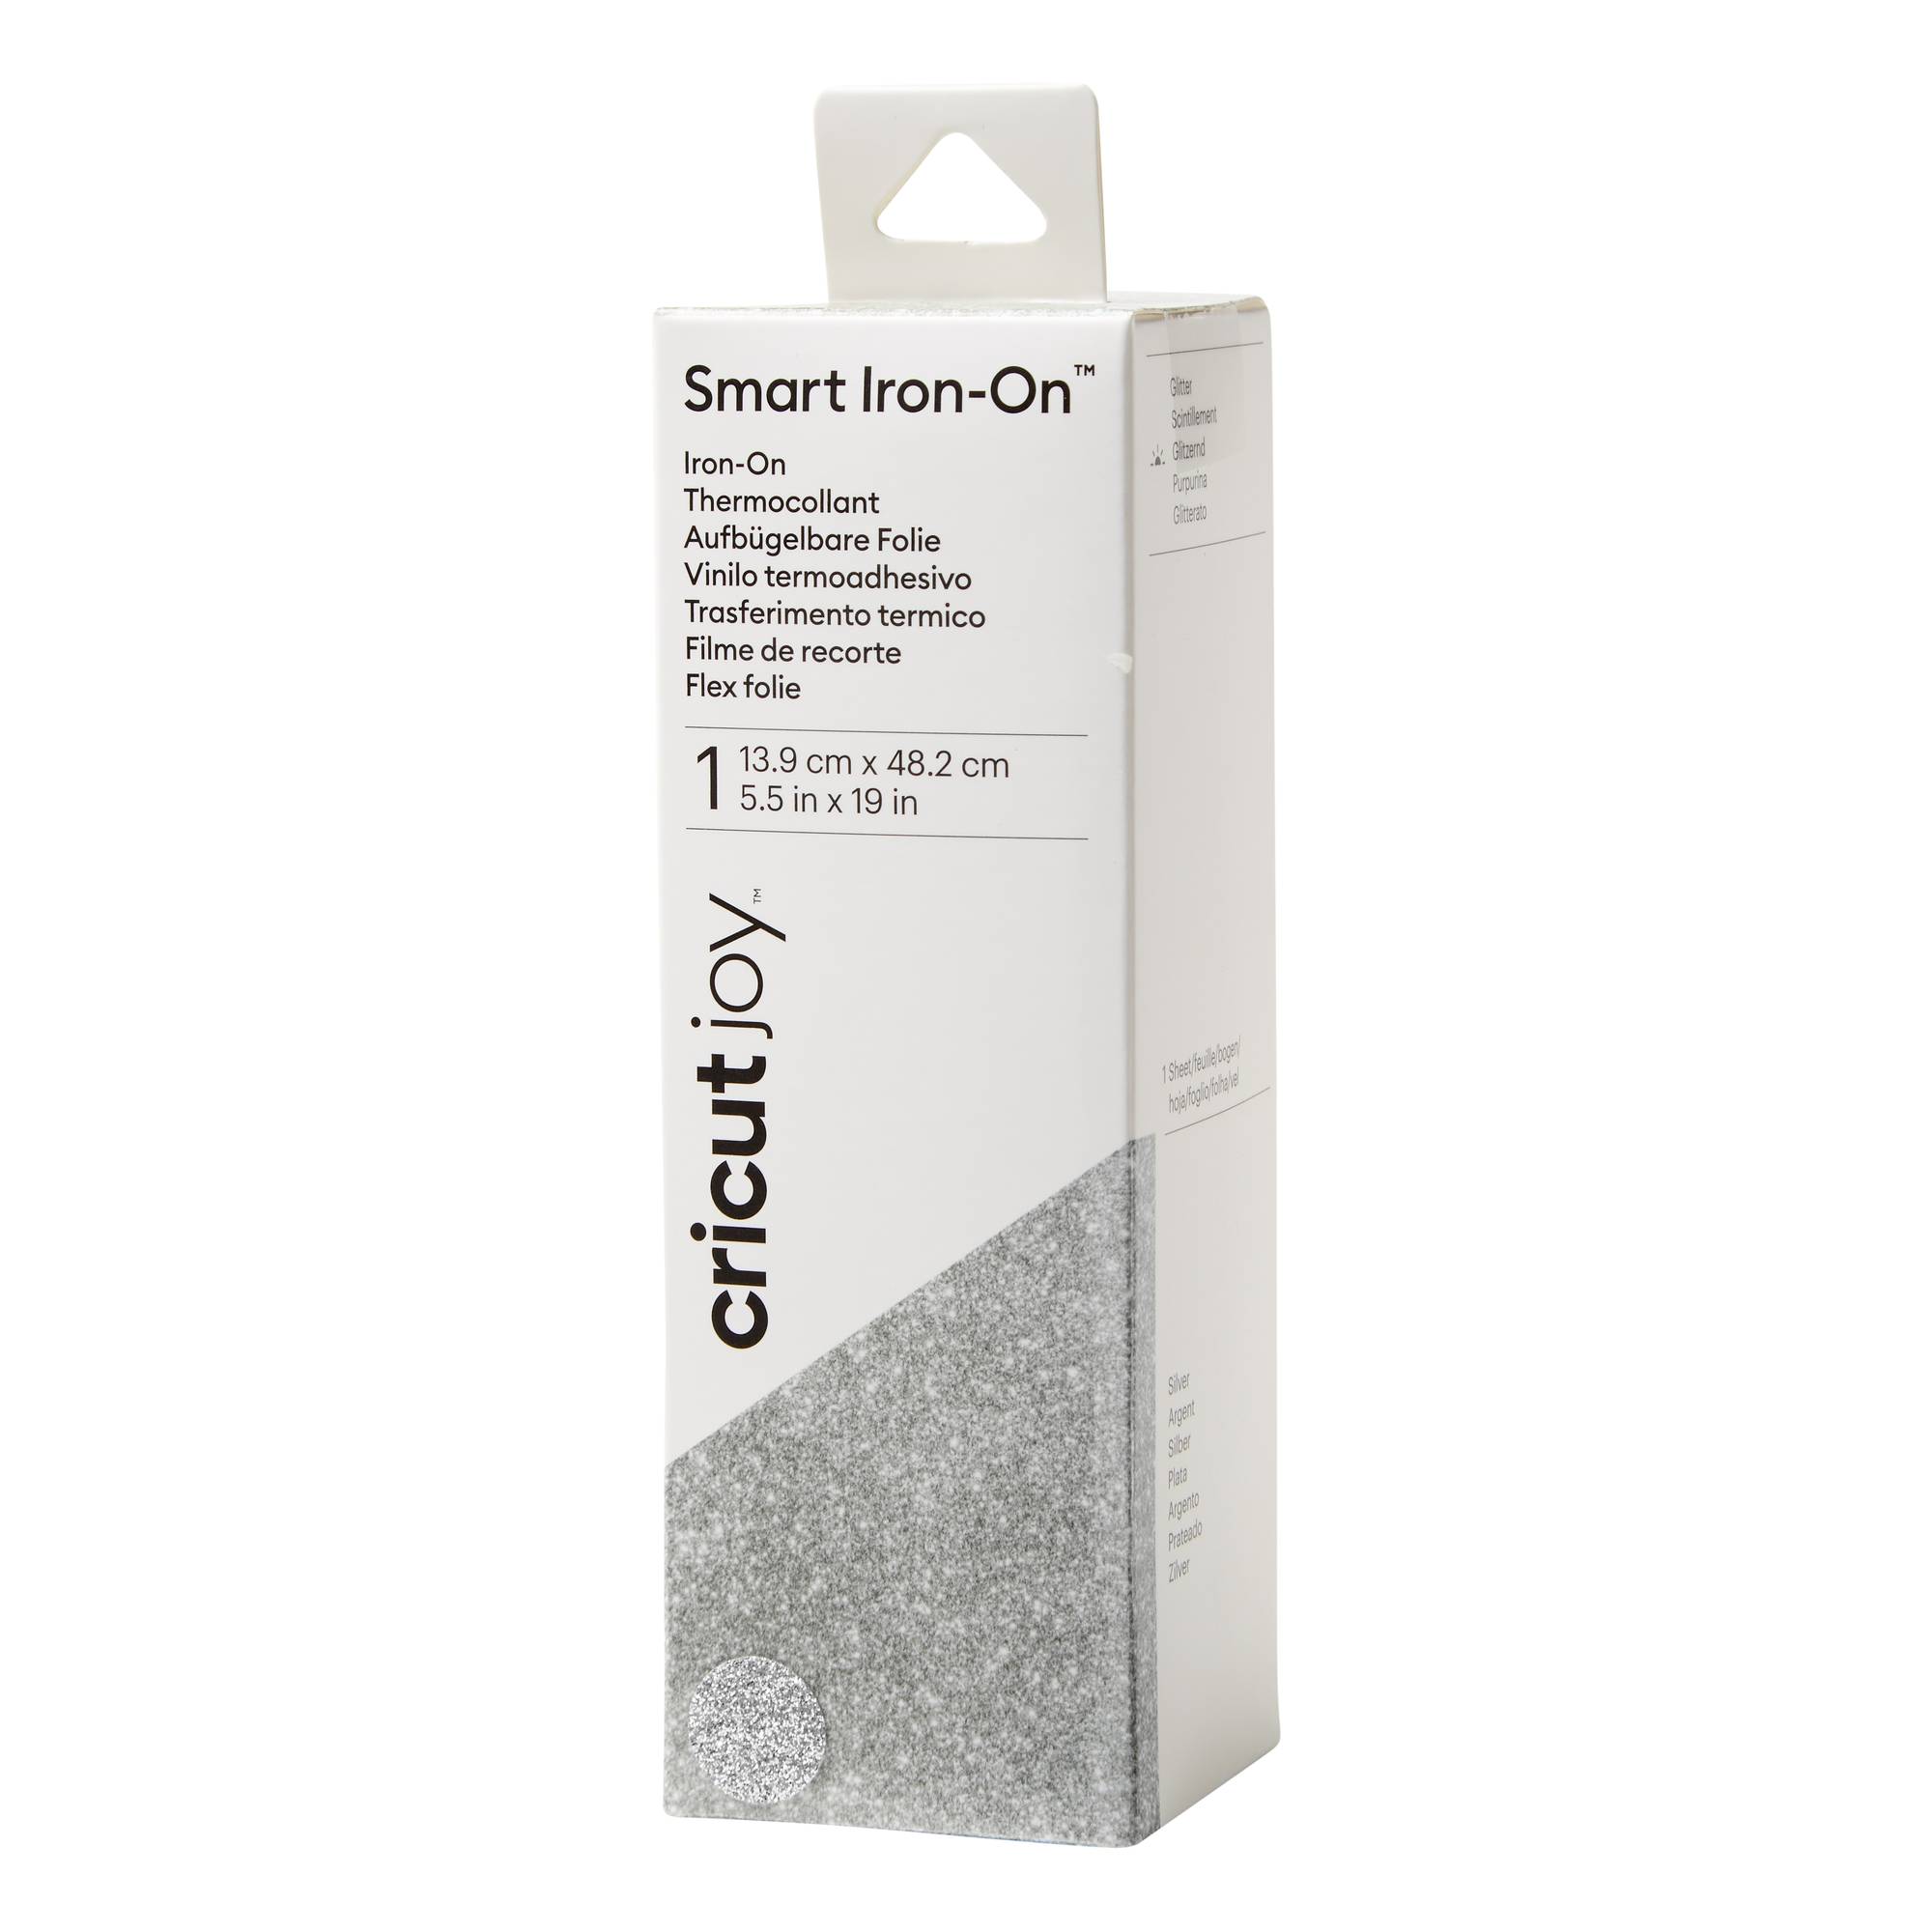 Cricut Joy Smart Iron-On Glitter Silver - Keep It Simple Paper Crafts